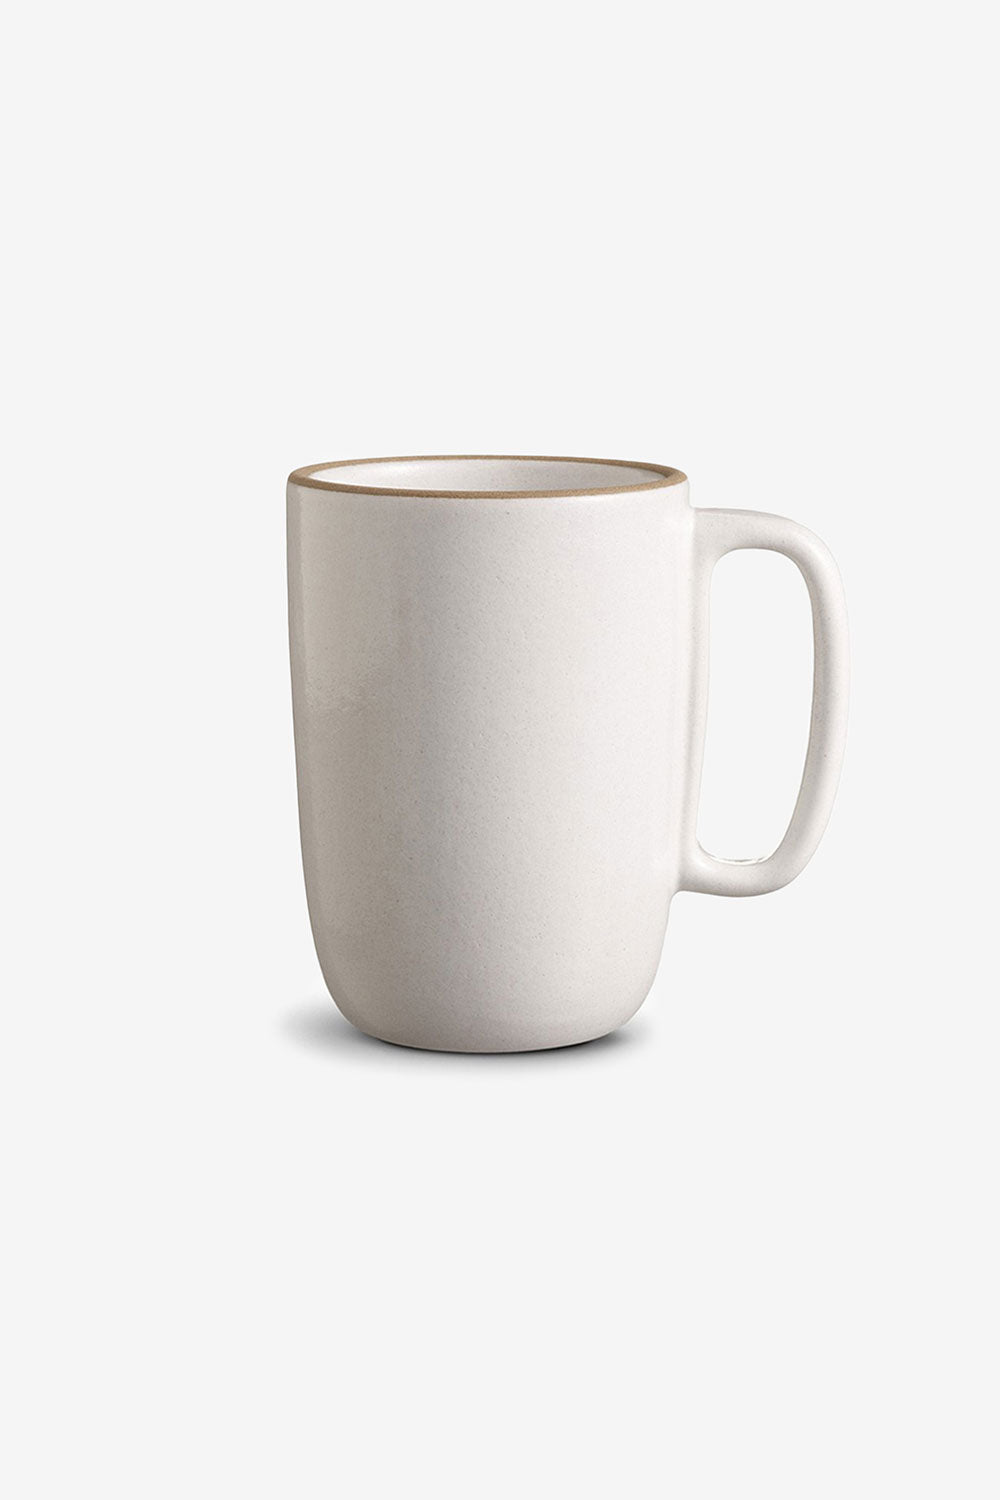 Alabama Chanin The Factory Blend Coffee Heath Ceramics Large White Mug